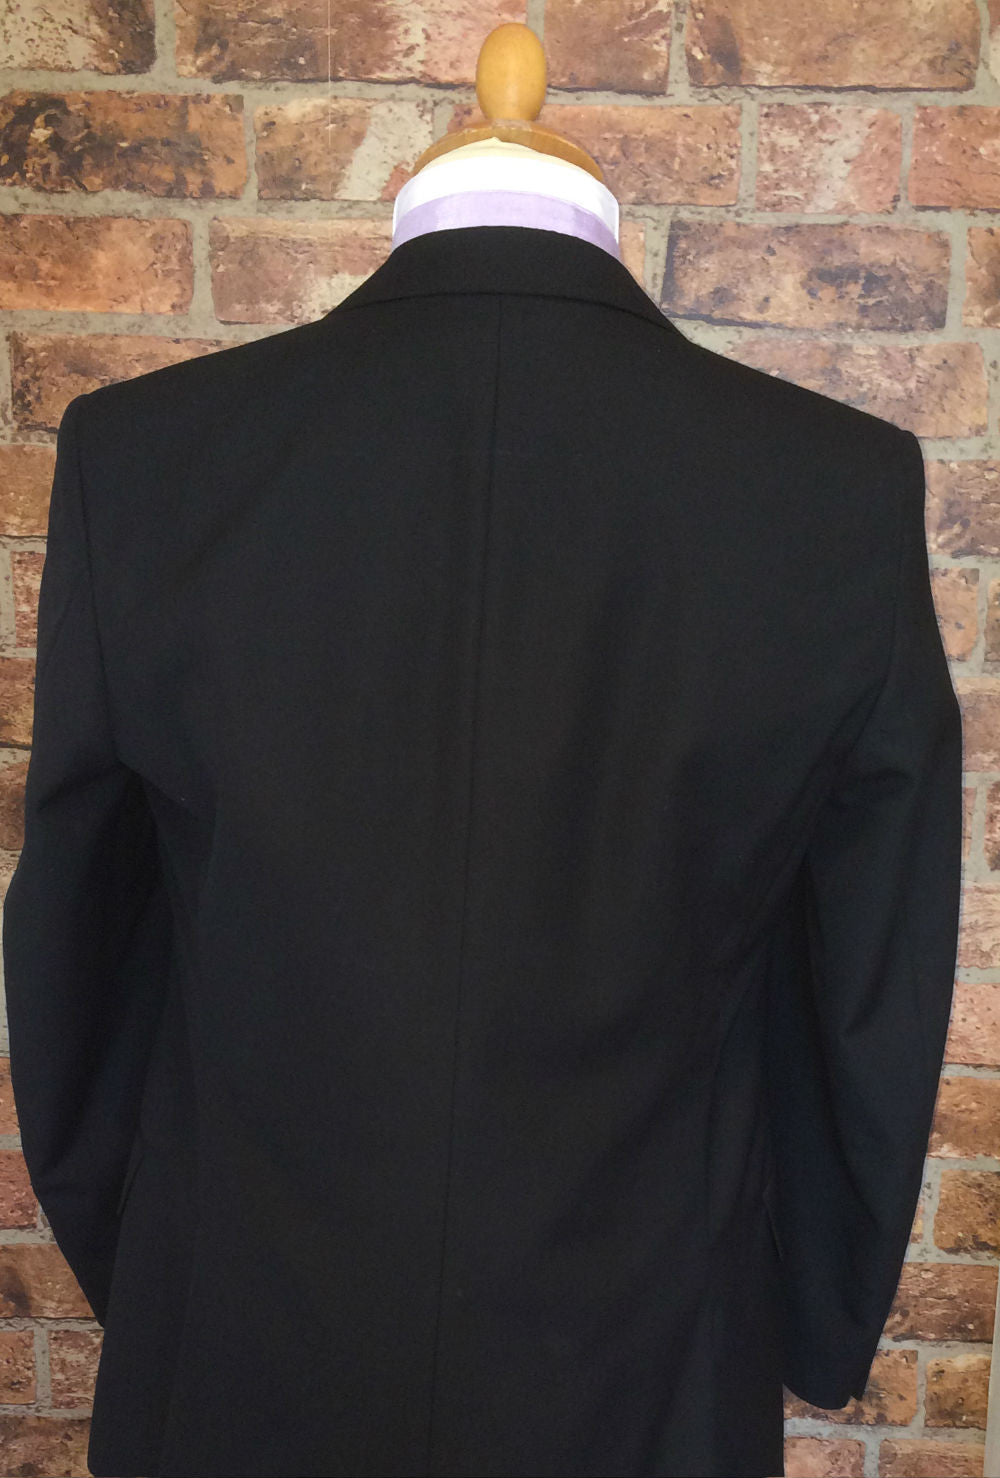 Black Prestige 3 piece Wedding suit (light weight and slim fit)